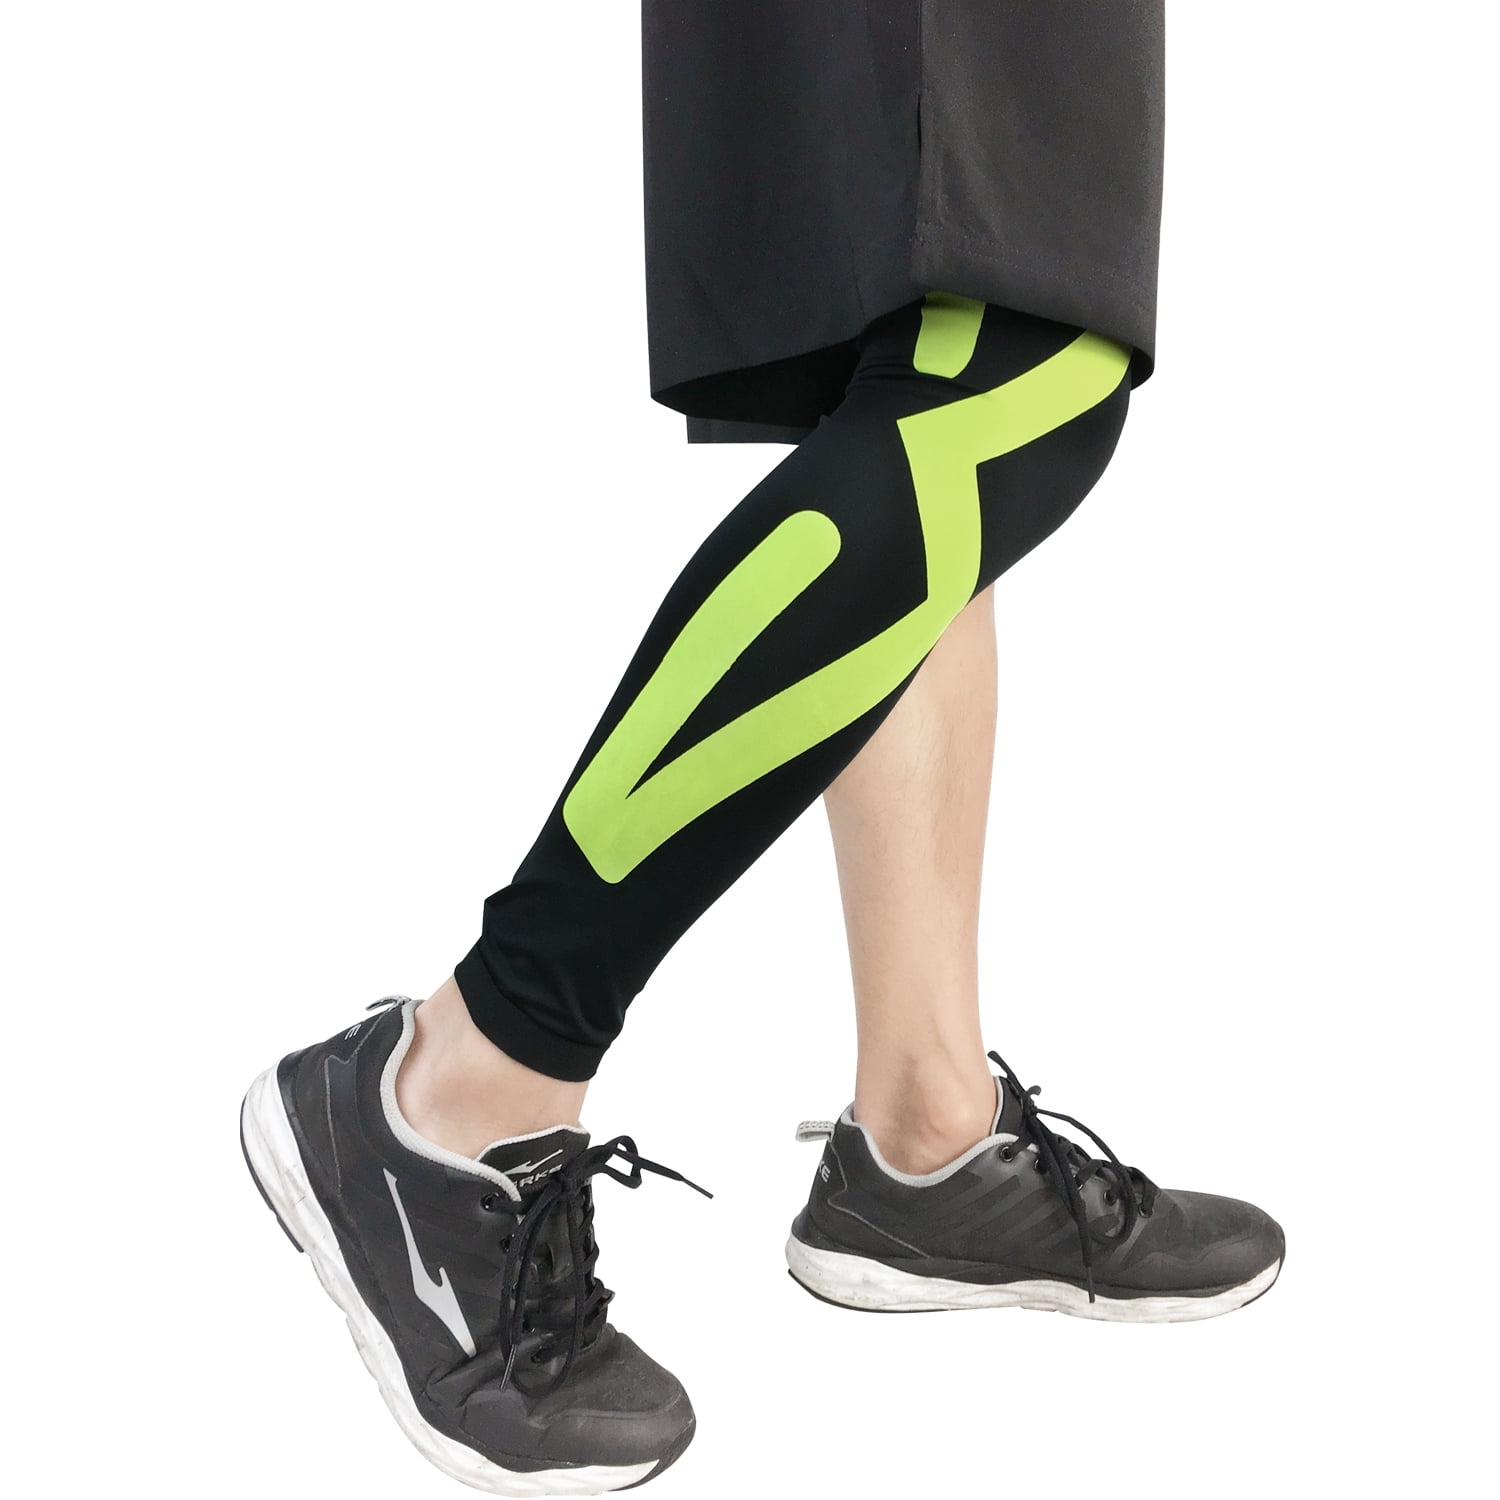 Long Compression Knee Brace Basketball Sport High Thigh Leg Sleeve for Men Women